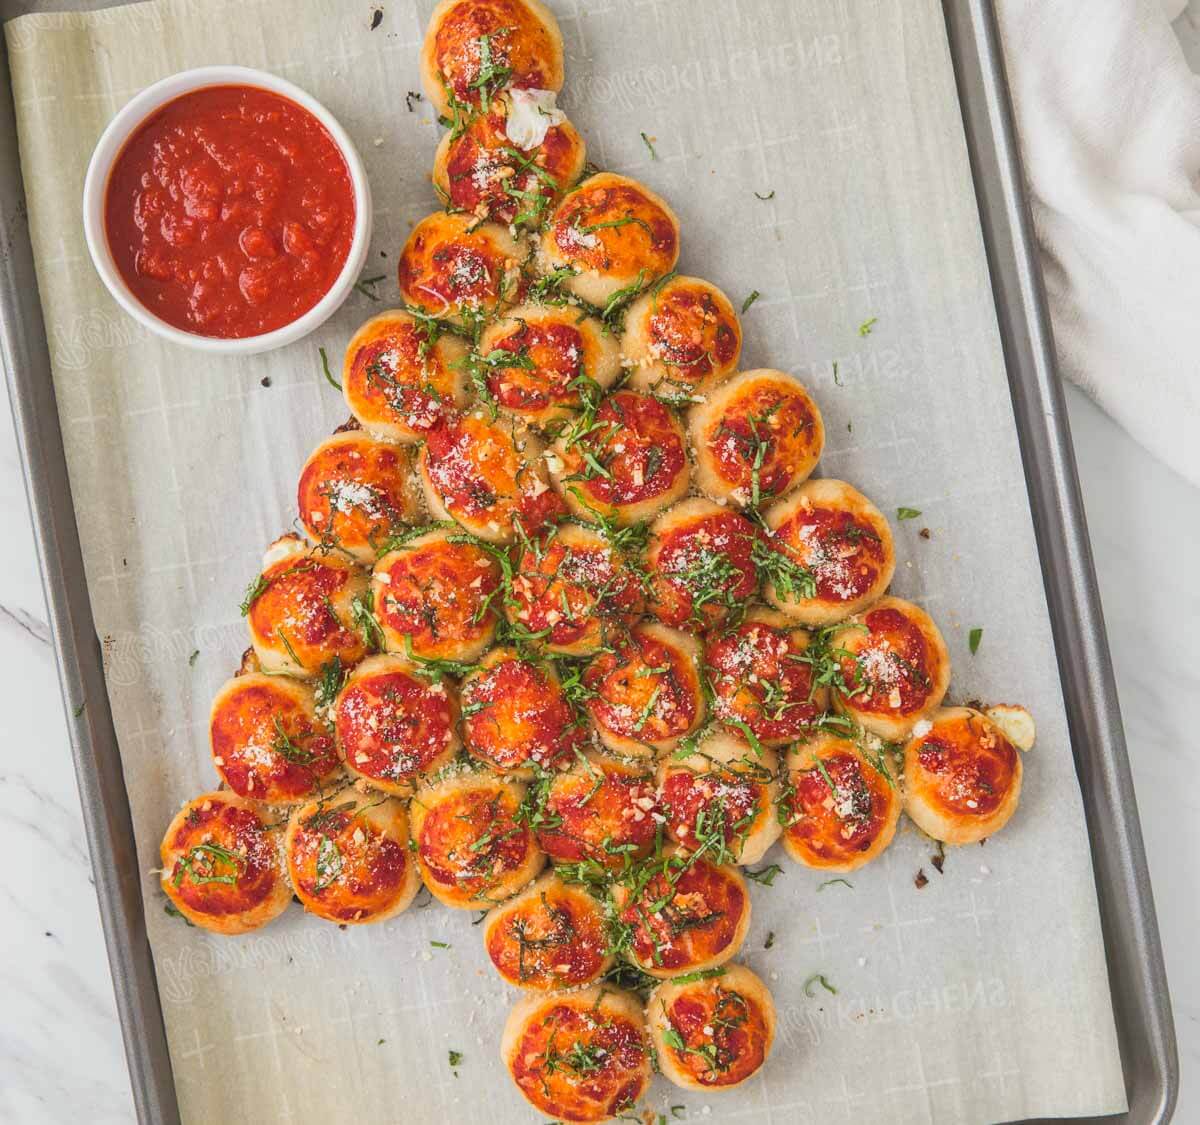 pull apart pizza bites arranged in Christmas tree shape on baking sheet.